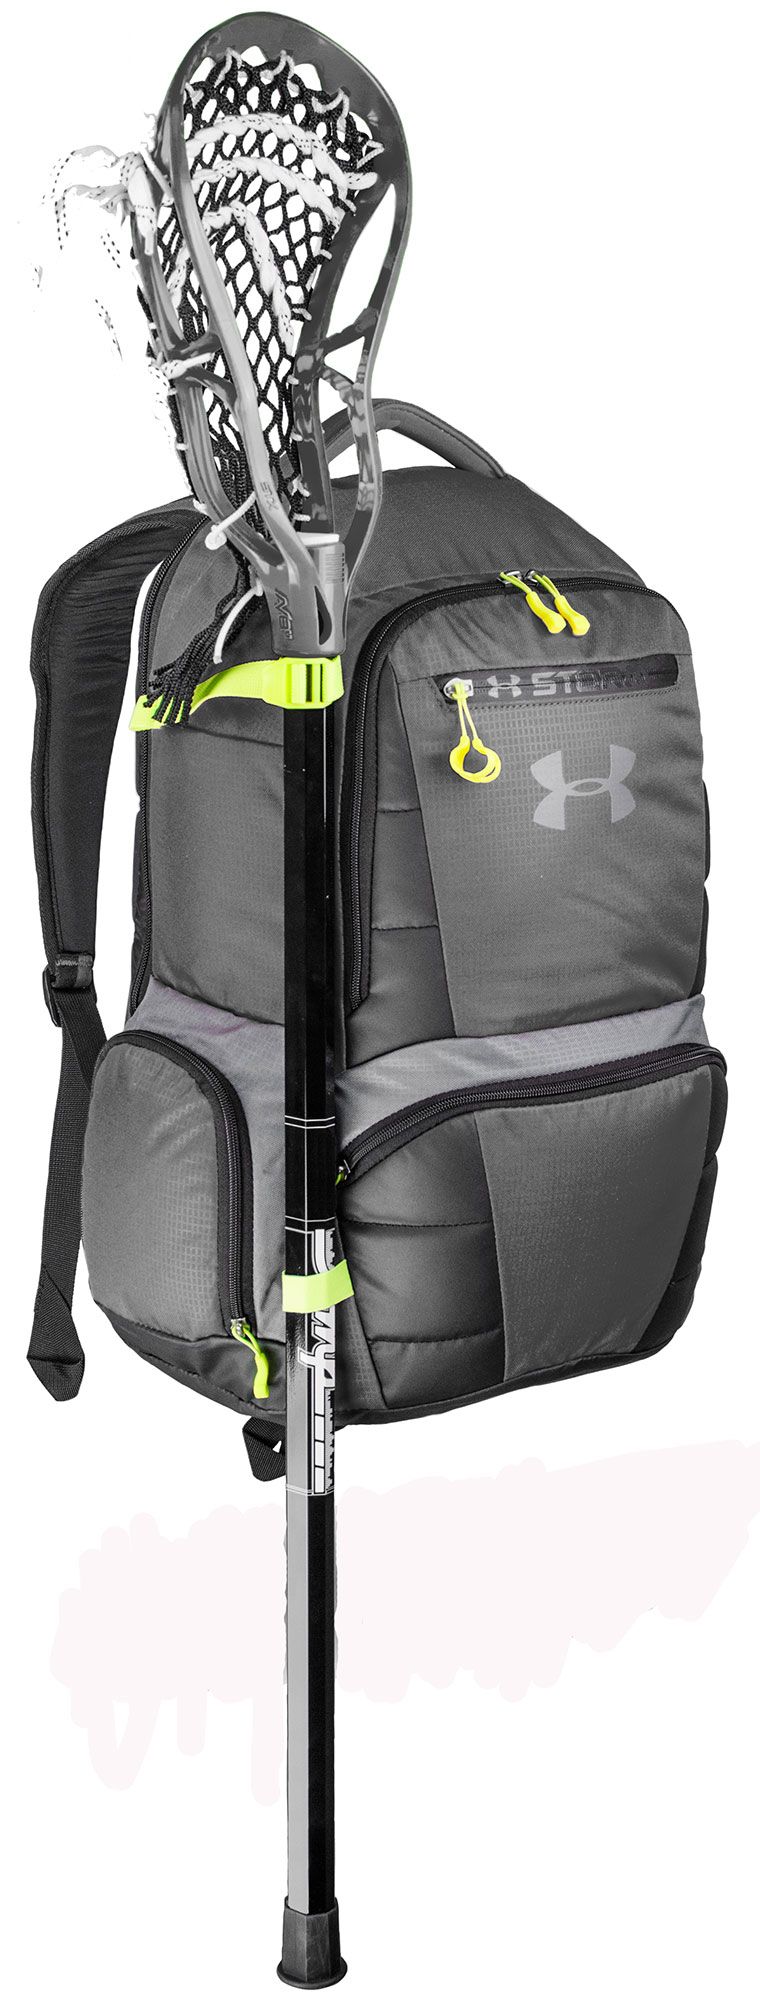 ua lacrosse backpack